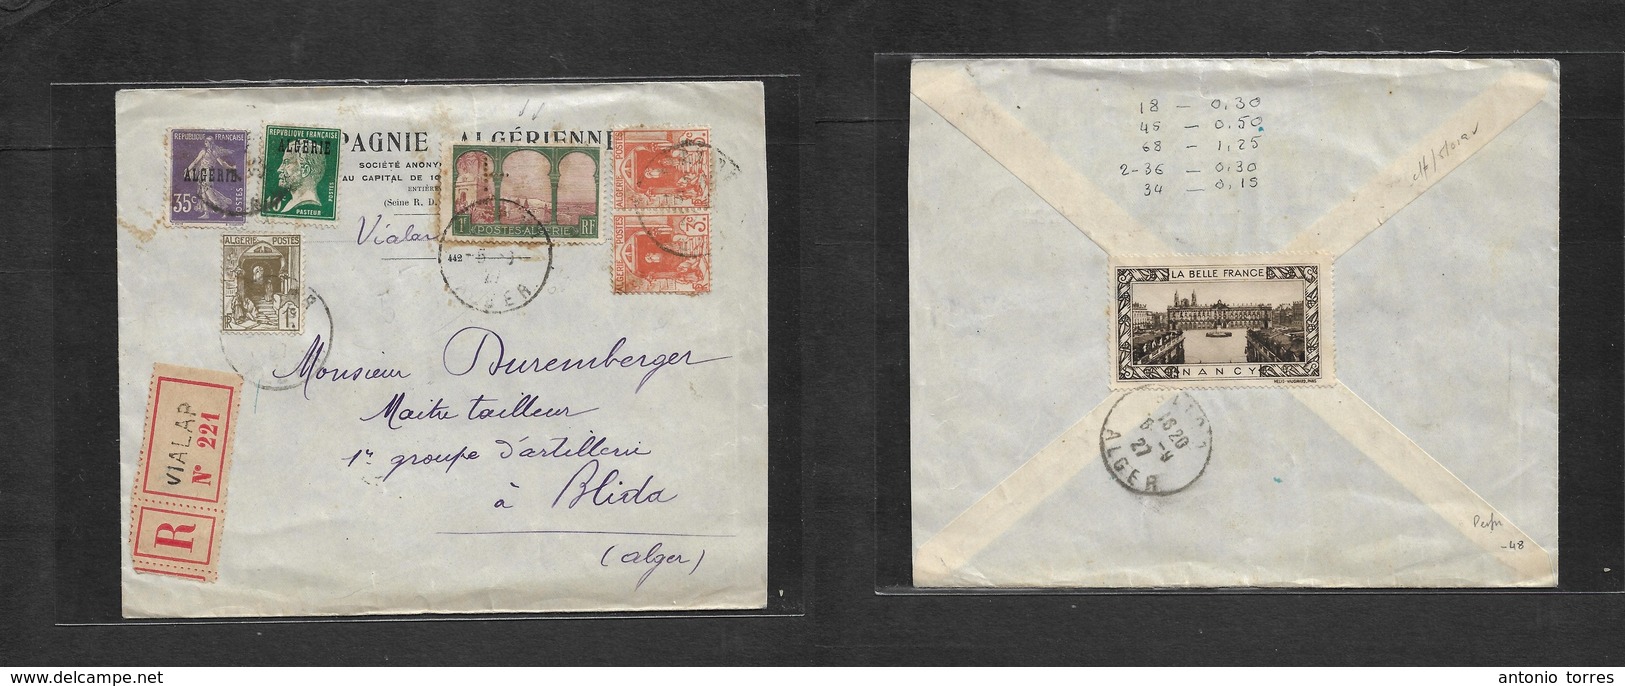 Algeria. 1927 (5 Sept)  Vialap - Blida. PERFIN Stamp Comercial Usage Ovptd Issue + Mixed. Registered Multifkd Envelope.  - Algerien (1962-...)